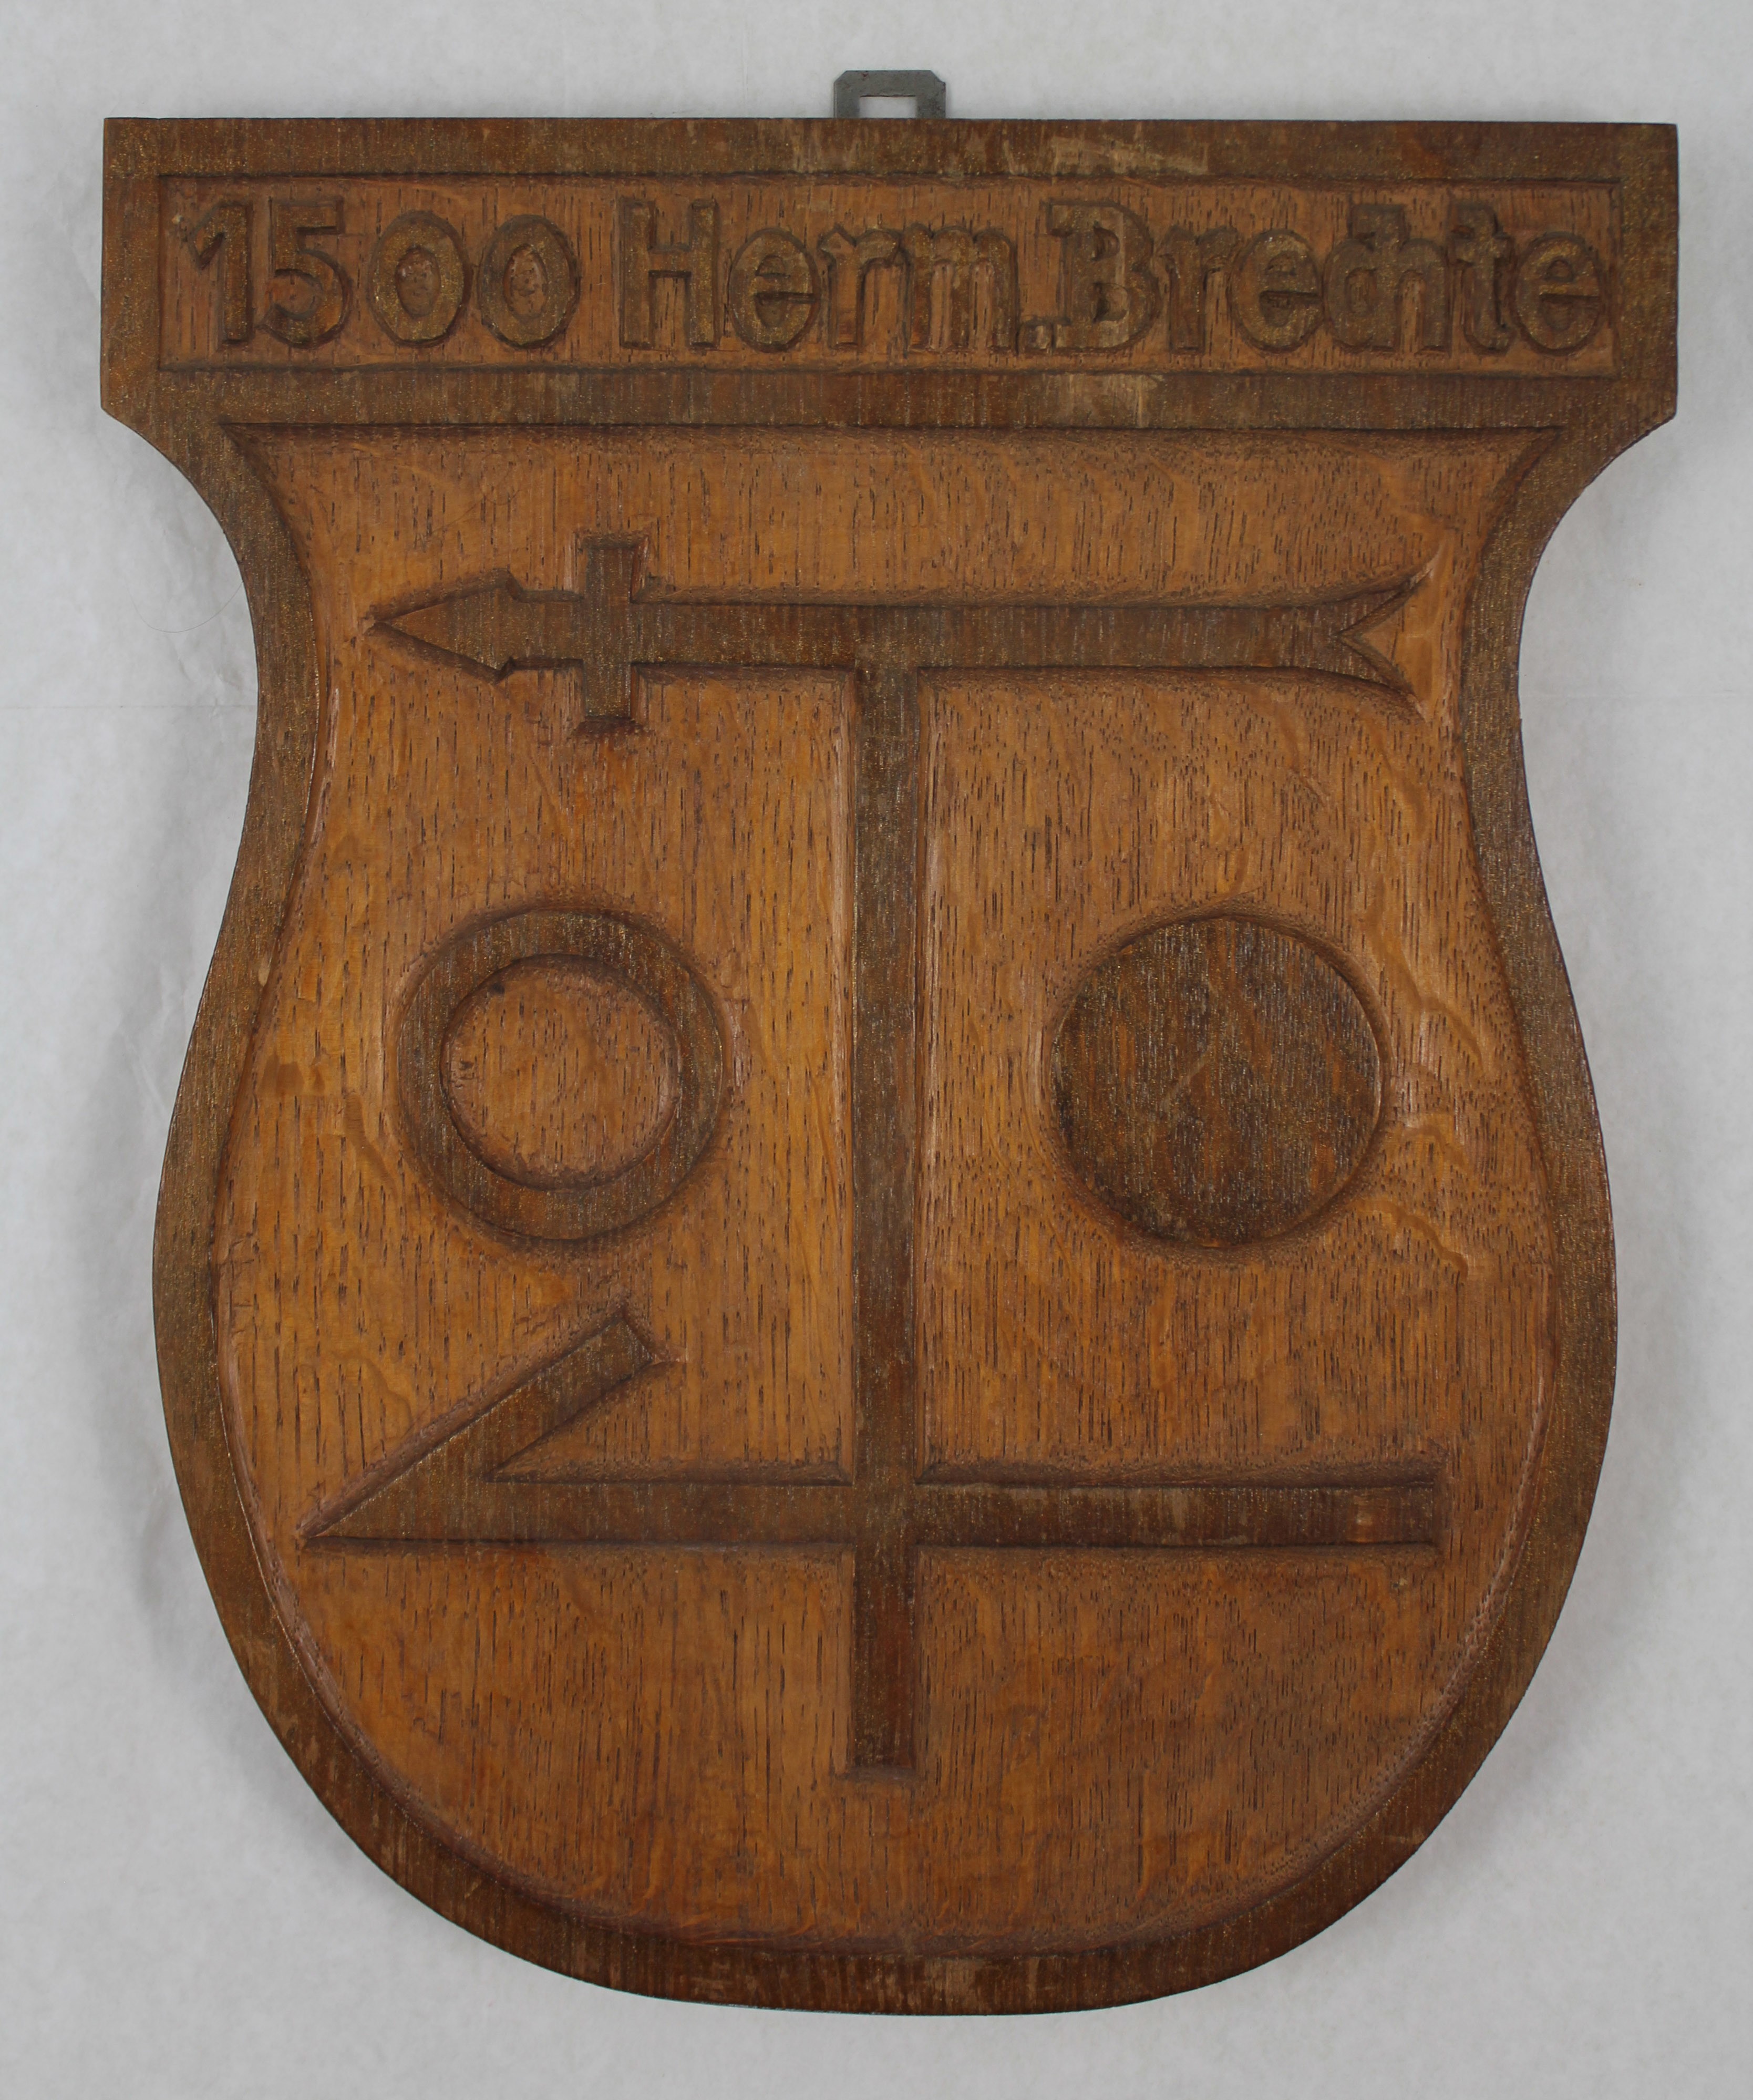 Wappenschild & Hölzernes Wappen mit Hausmarke, Herm. Brechte 1500 (Hellweg-Museum Unna CC BY-NC-SA)